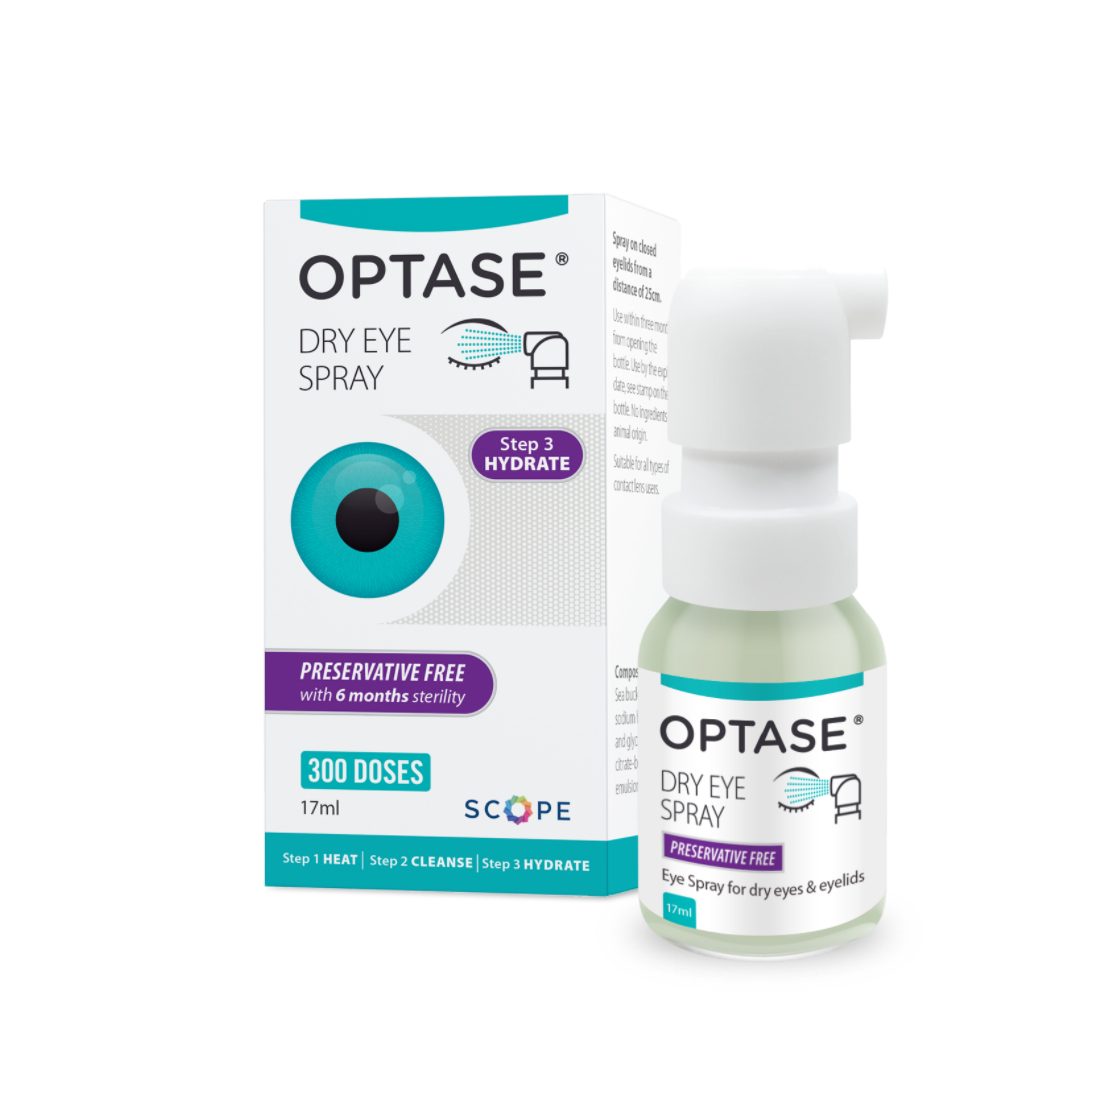 OPTASE Dry Eye Spray 17ml / 300 doses